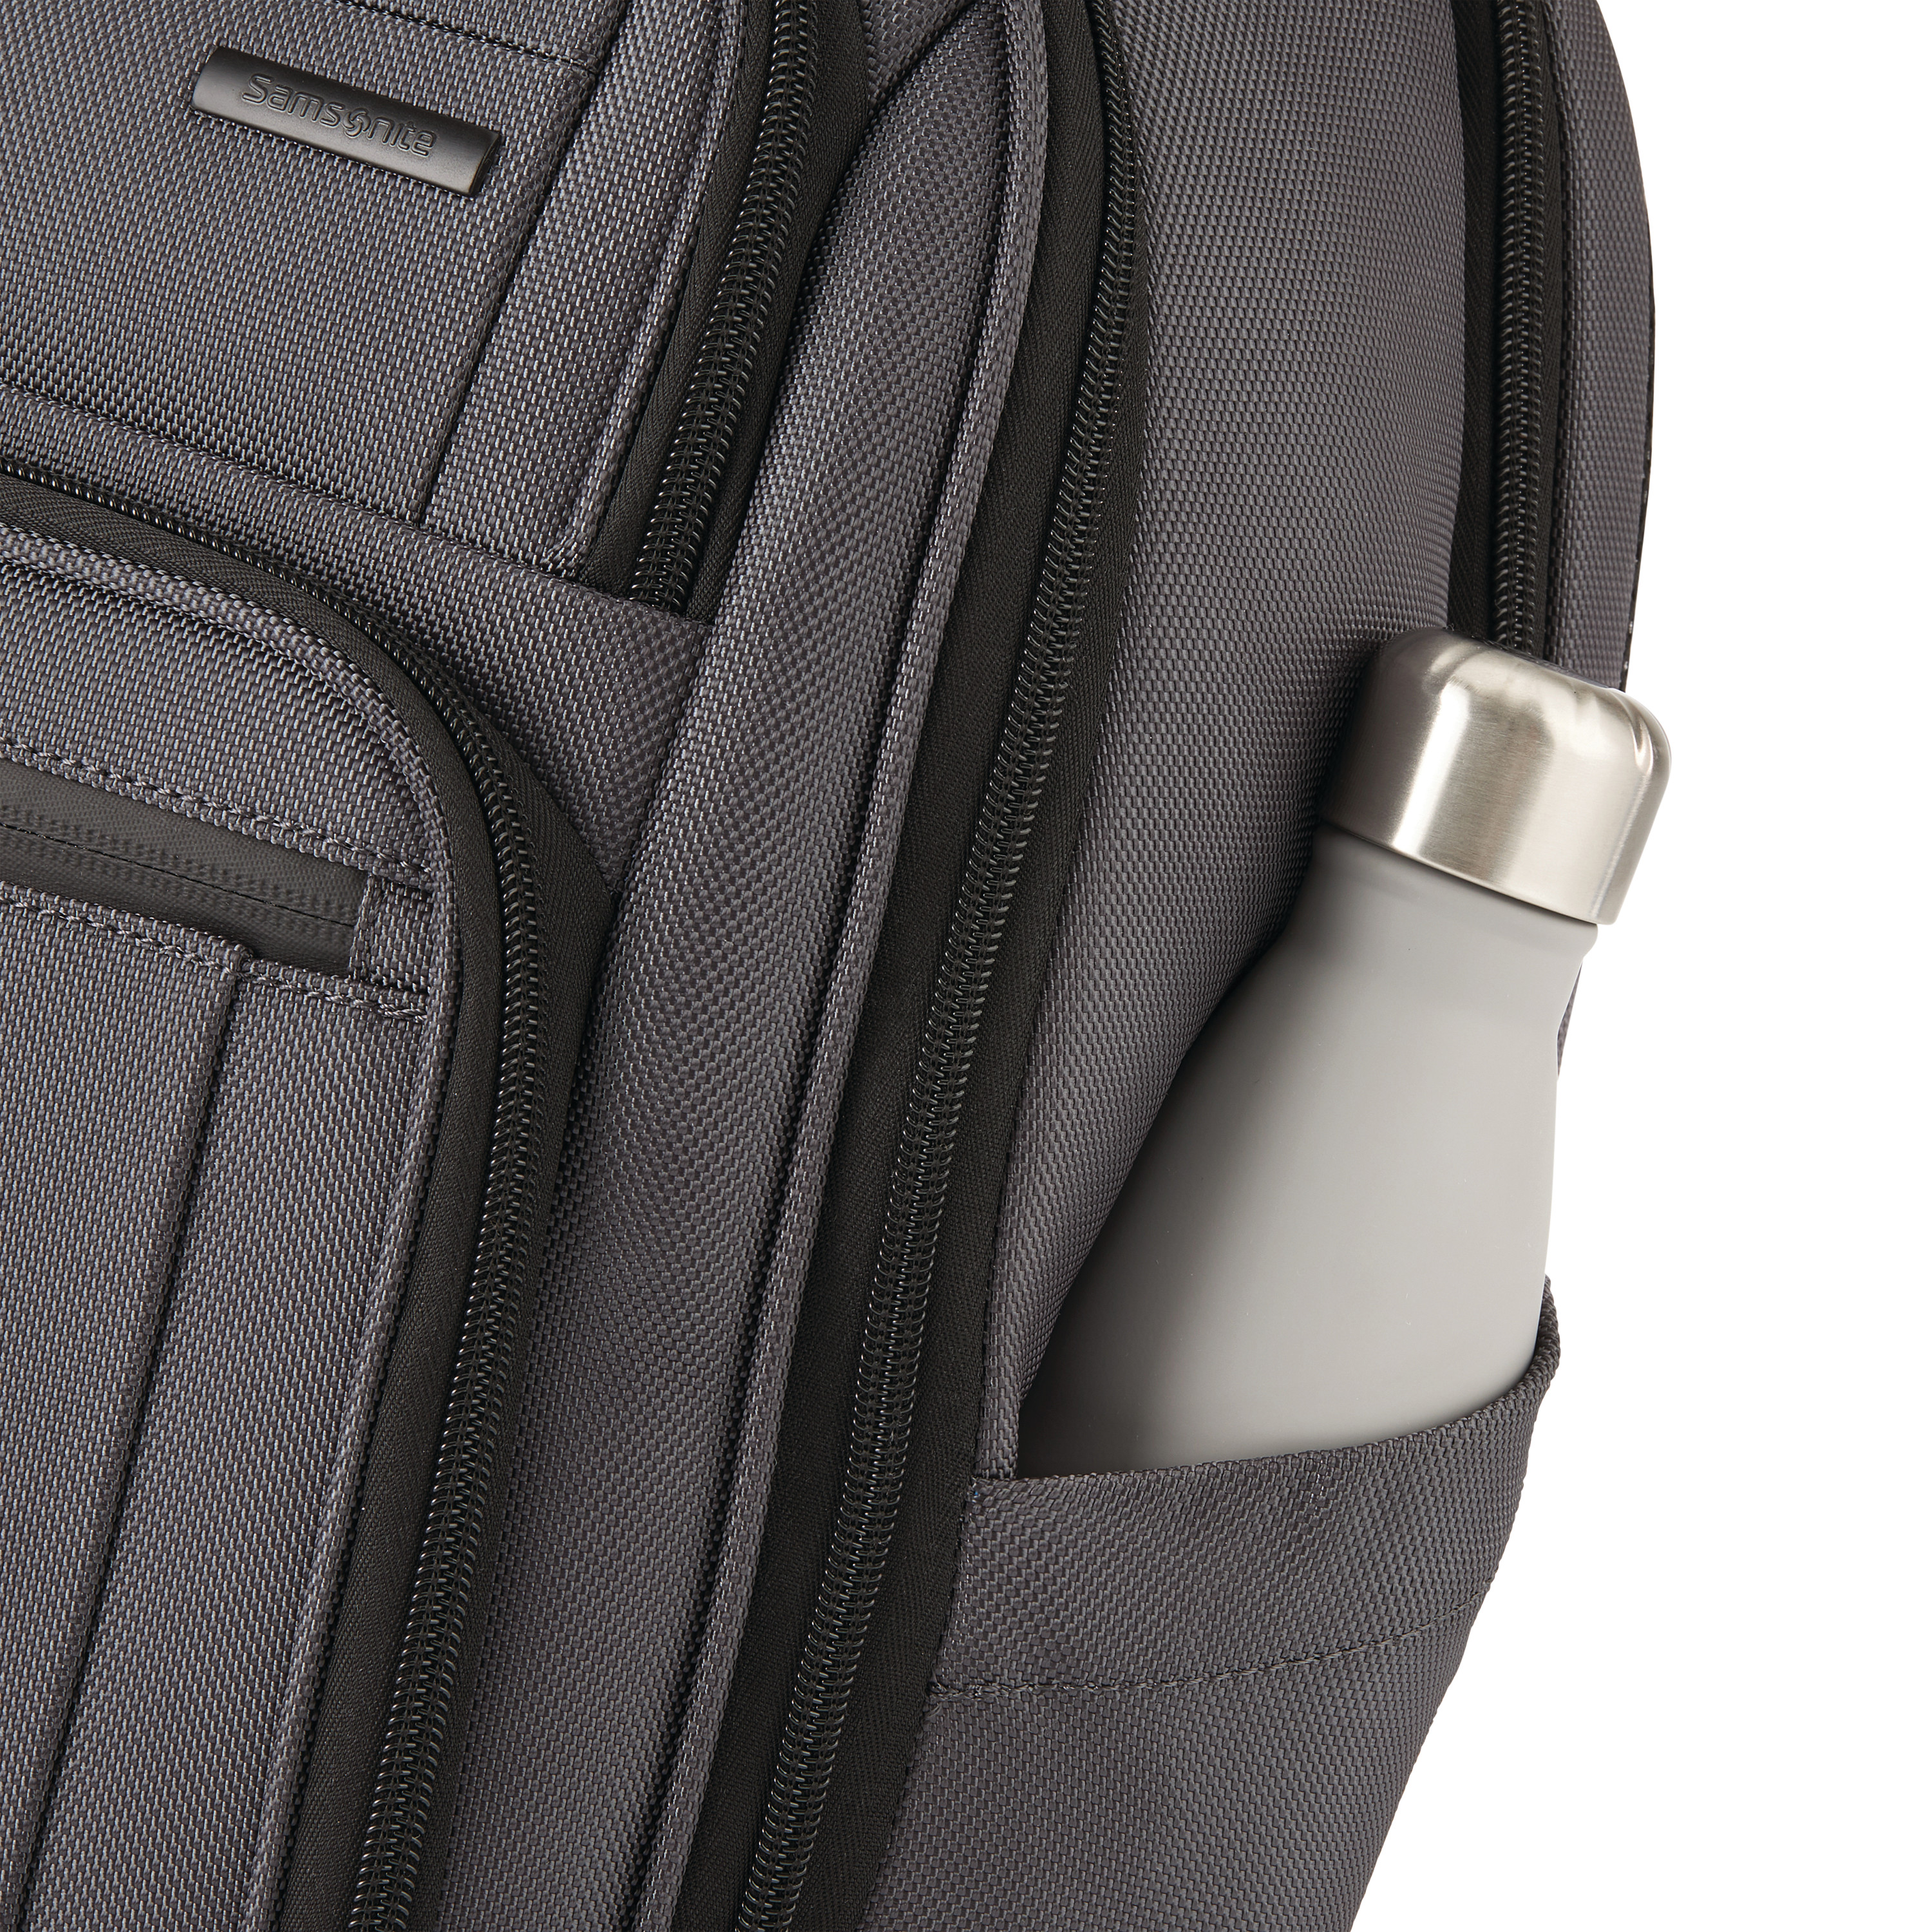 Buy Novex Laptop Backpack for USD 74.99 | Samsonite US